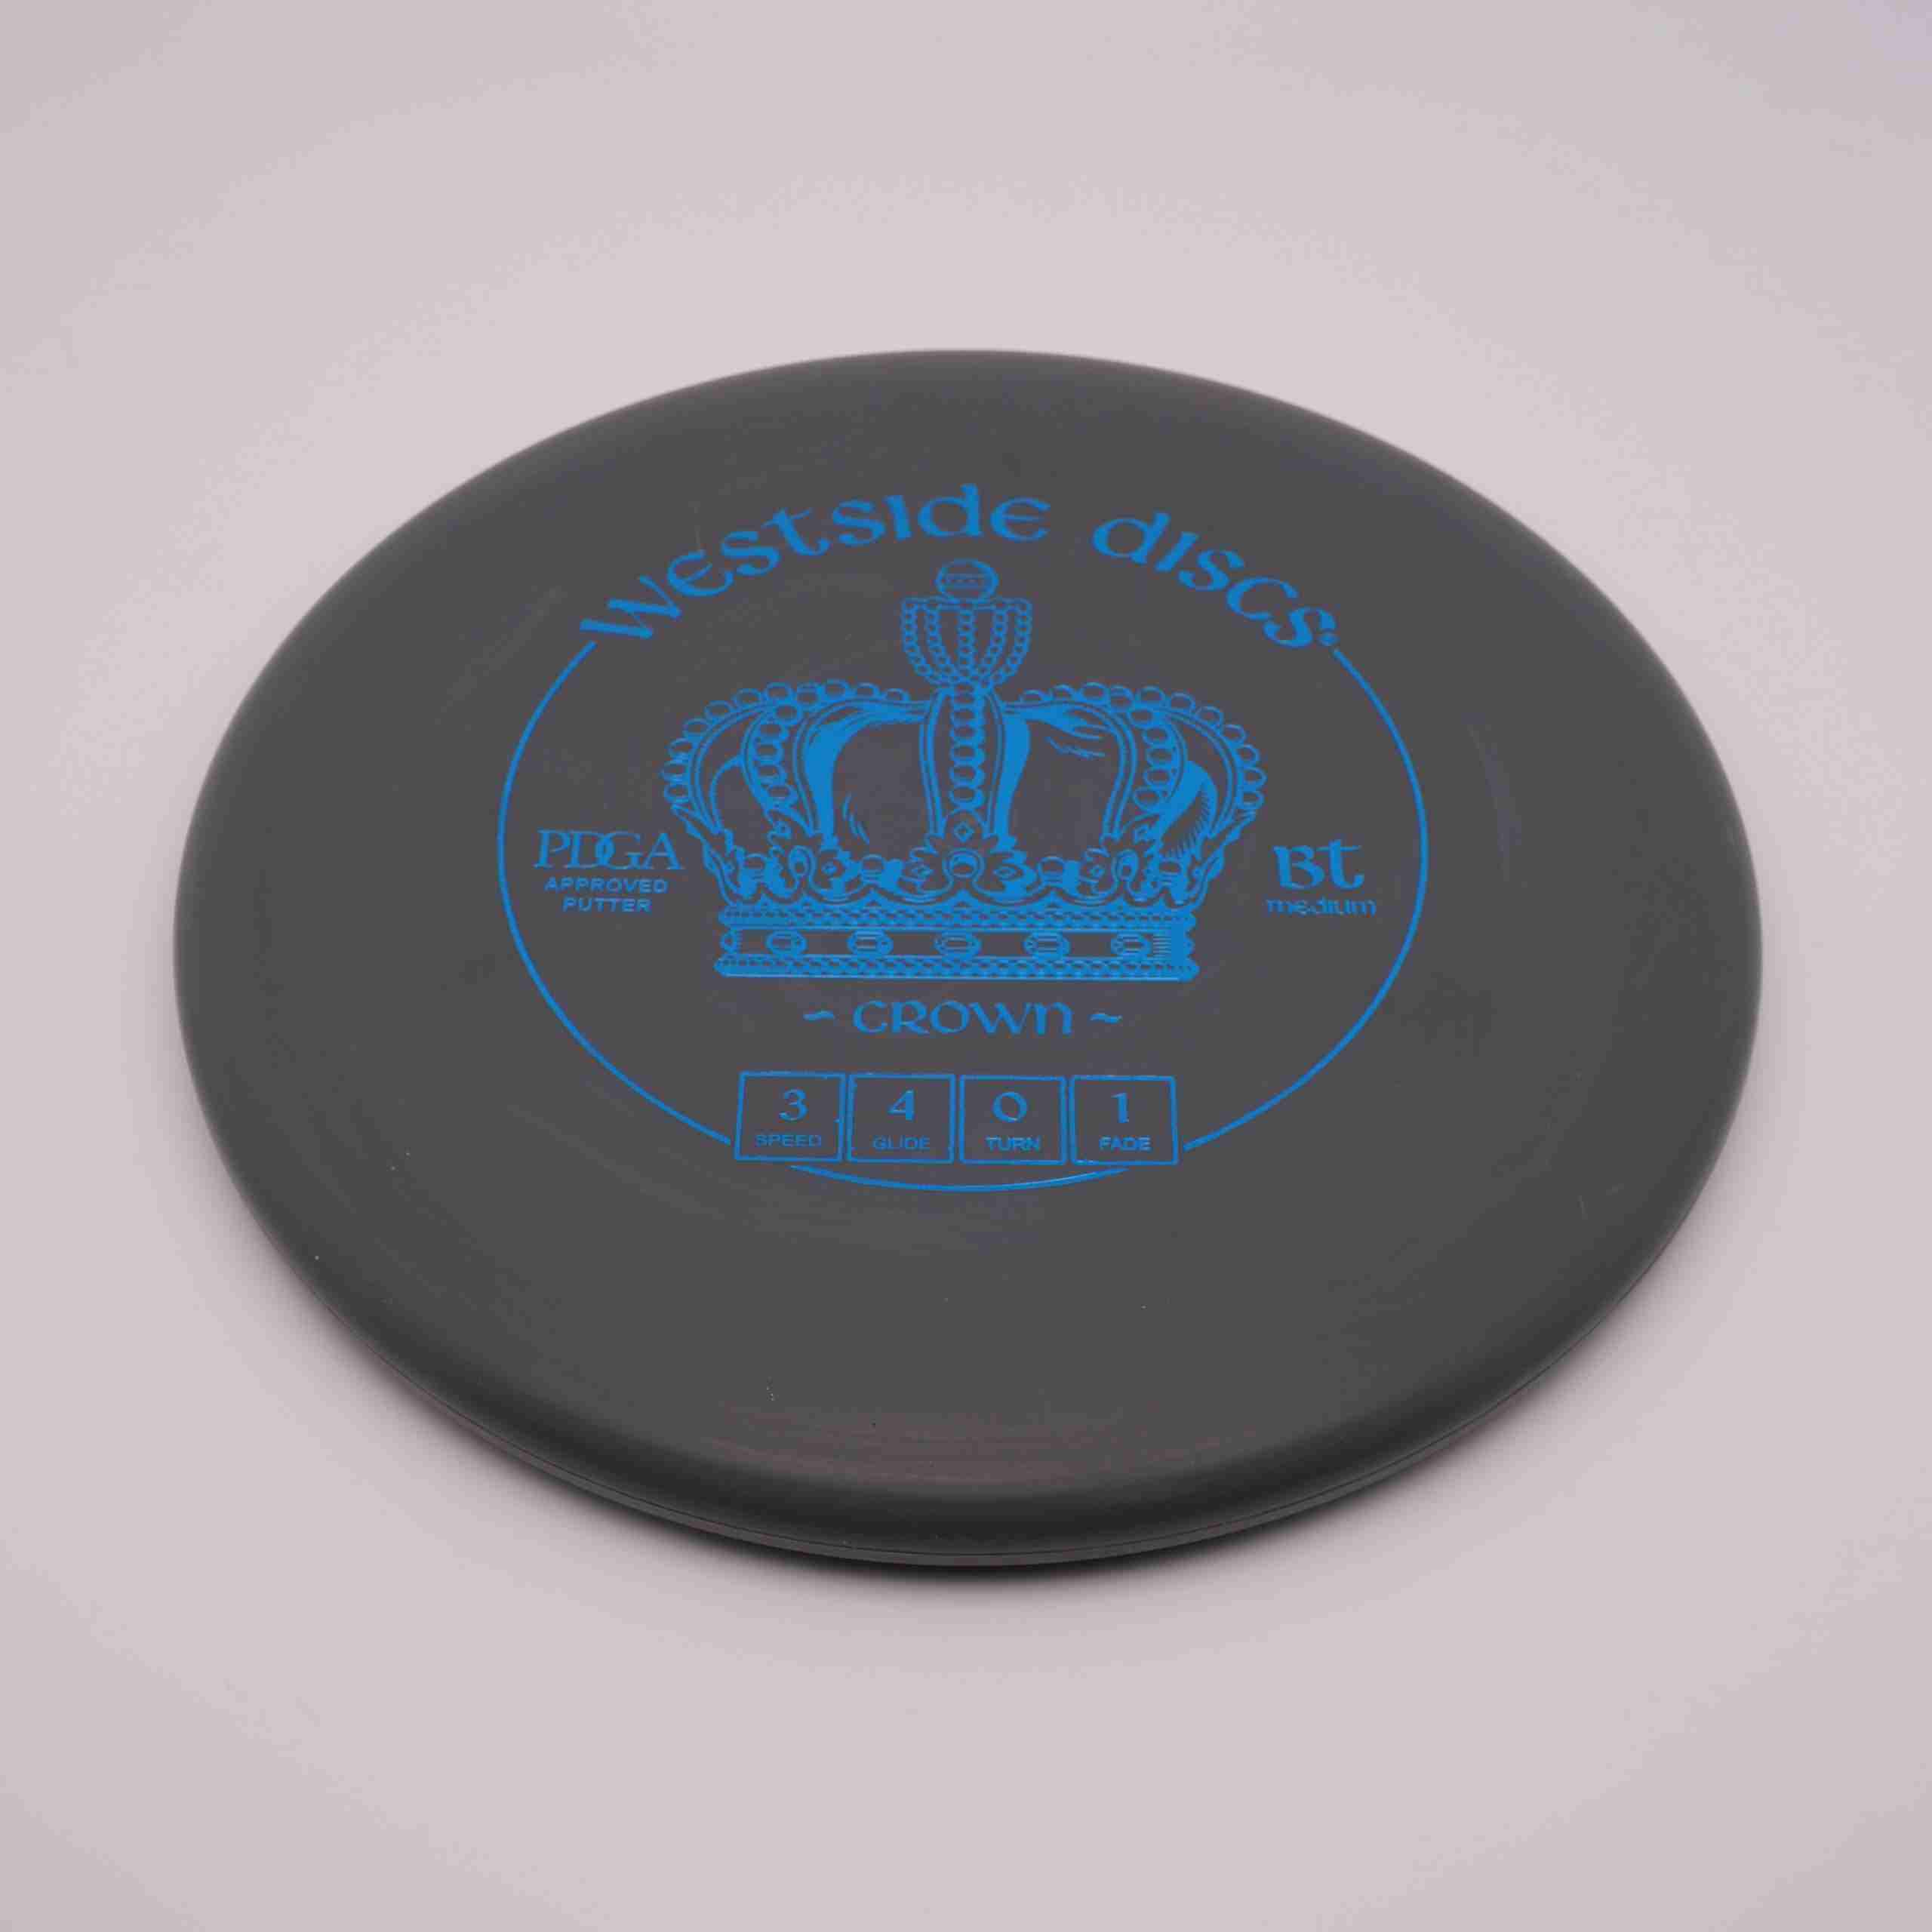 Westside Discs | BT Medium | Crown